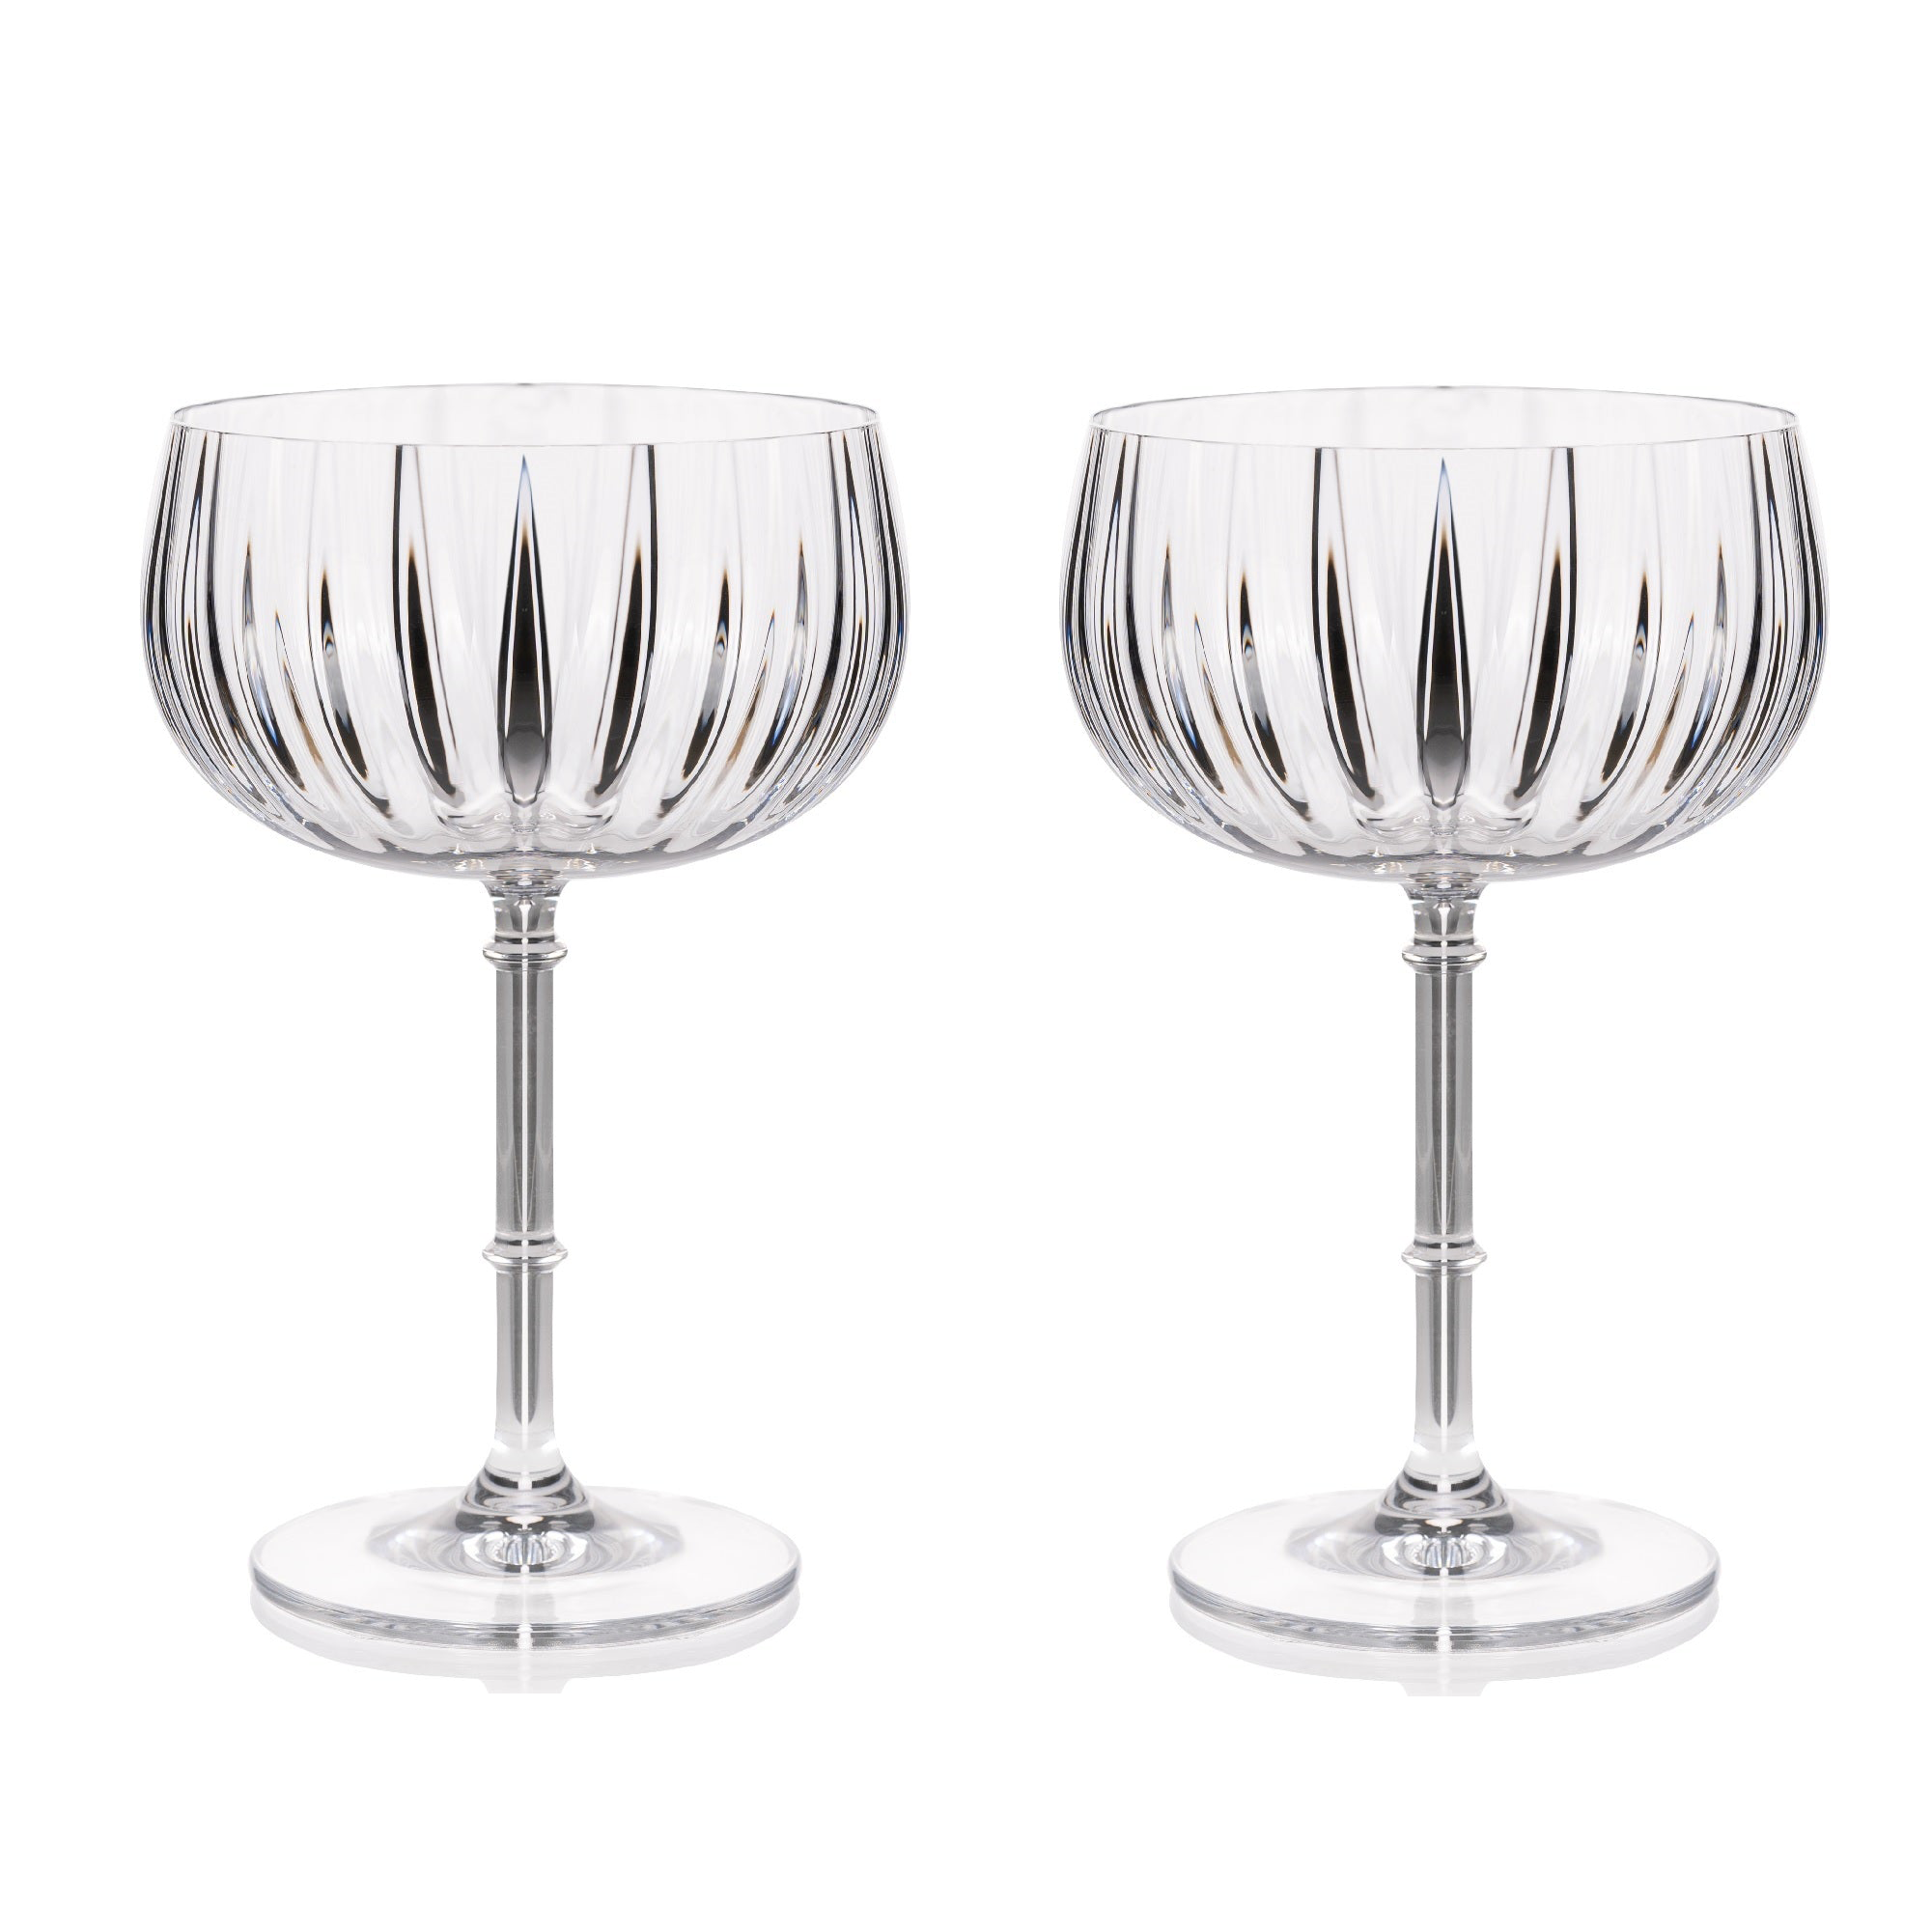 Rims Orient-Coupe Wine Glasses - Set of 2 (355 mL / 12 fl. oz.)